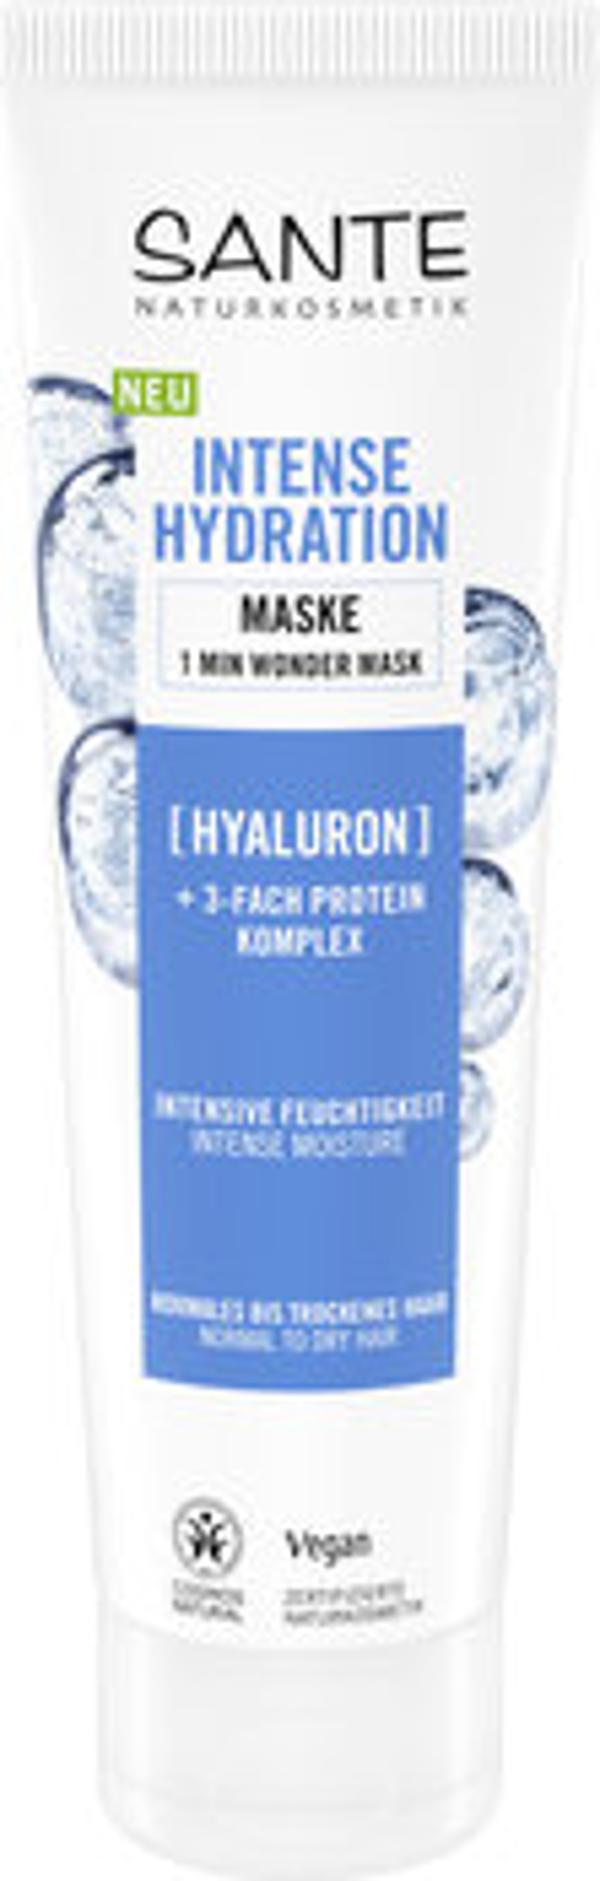 Produktfoto zu Intense Hydration Haarmaske Hyaluron 150ml